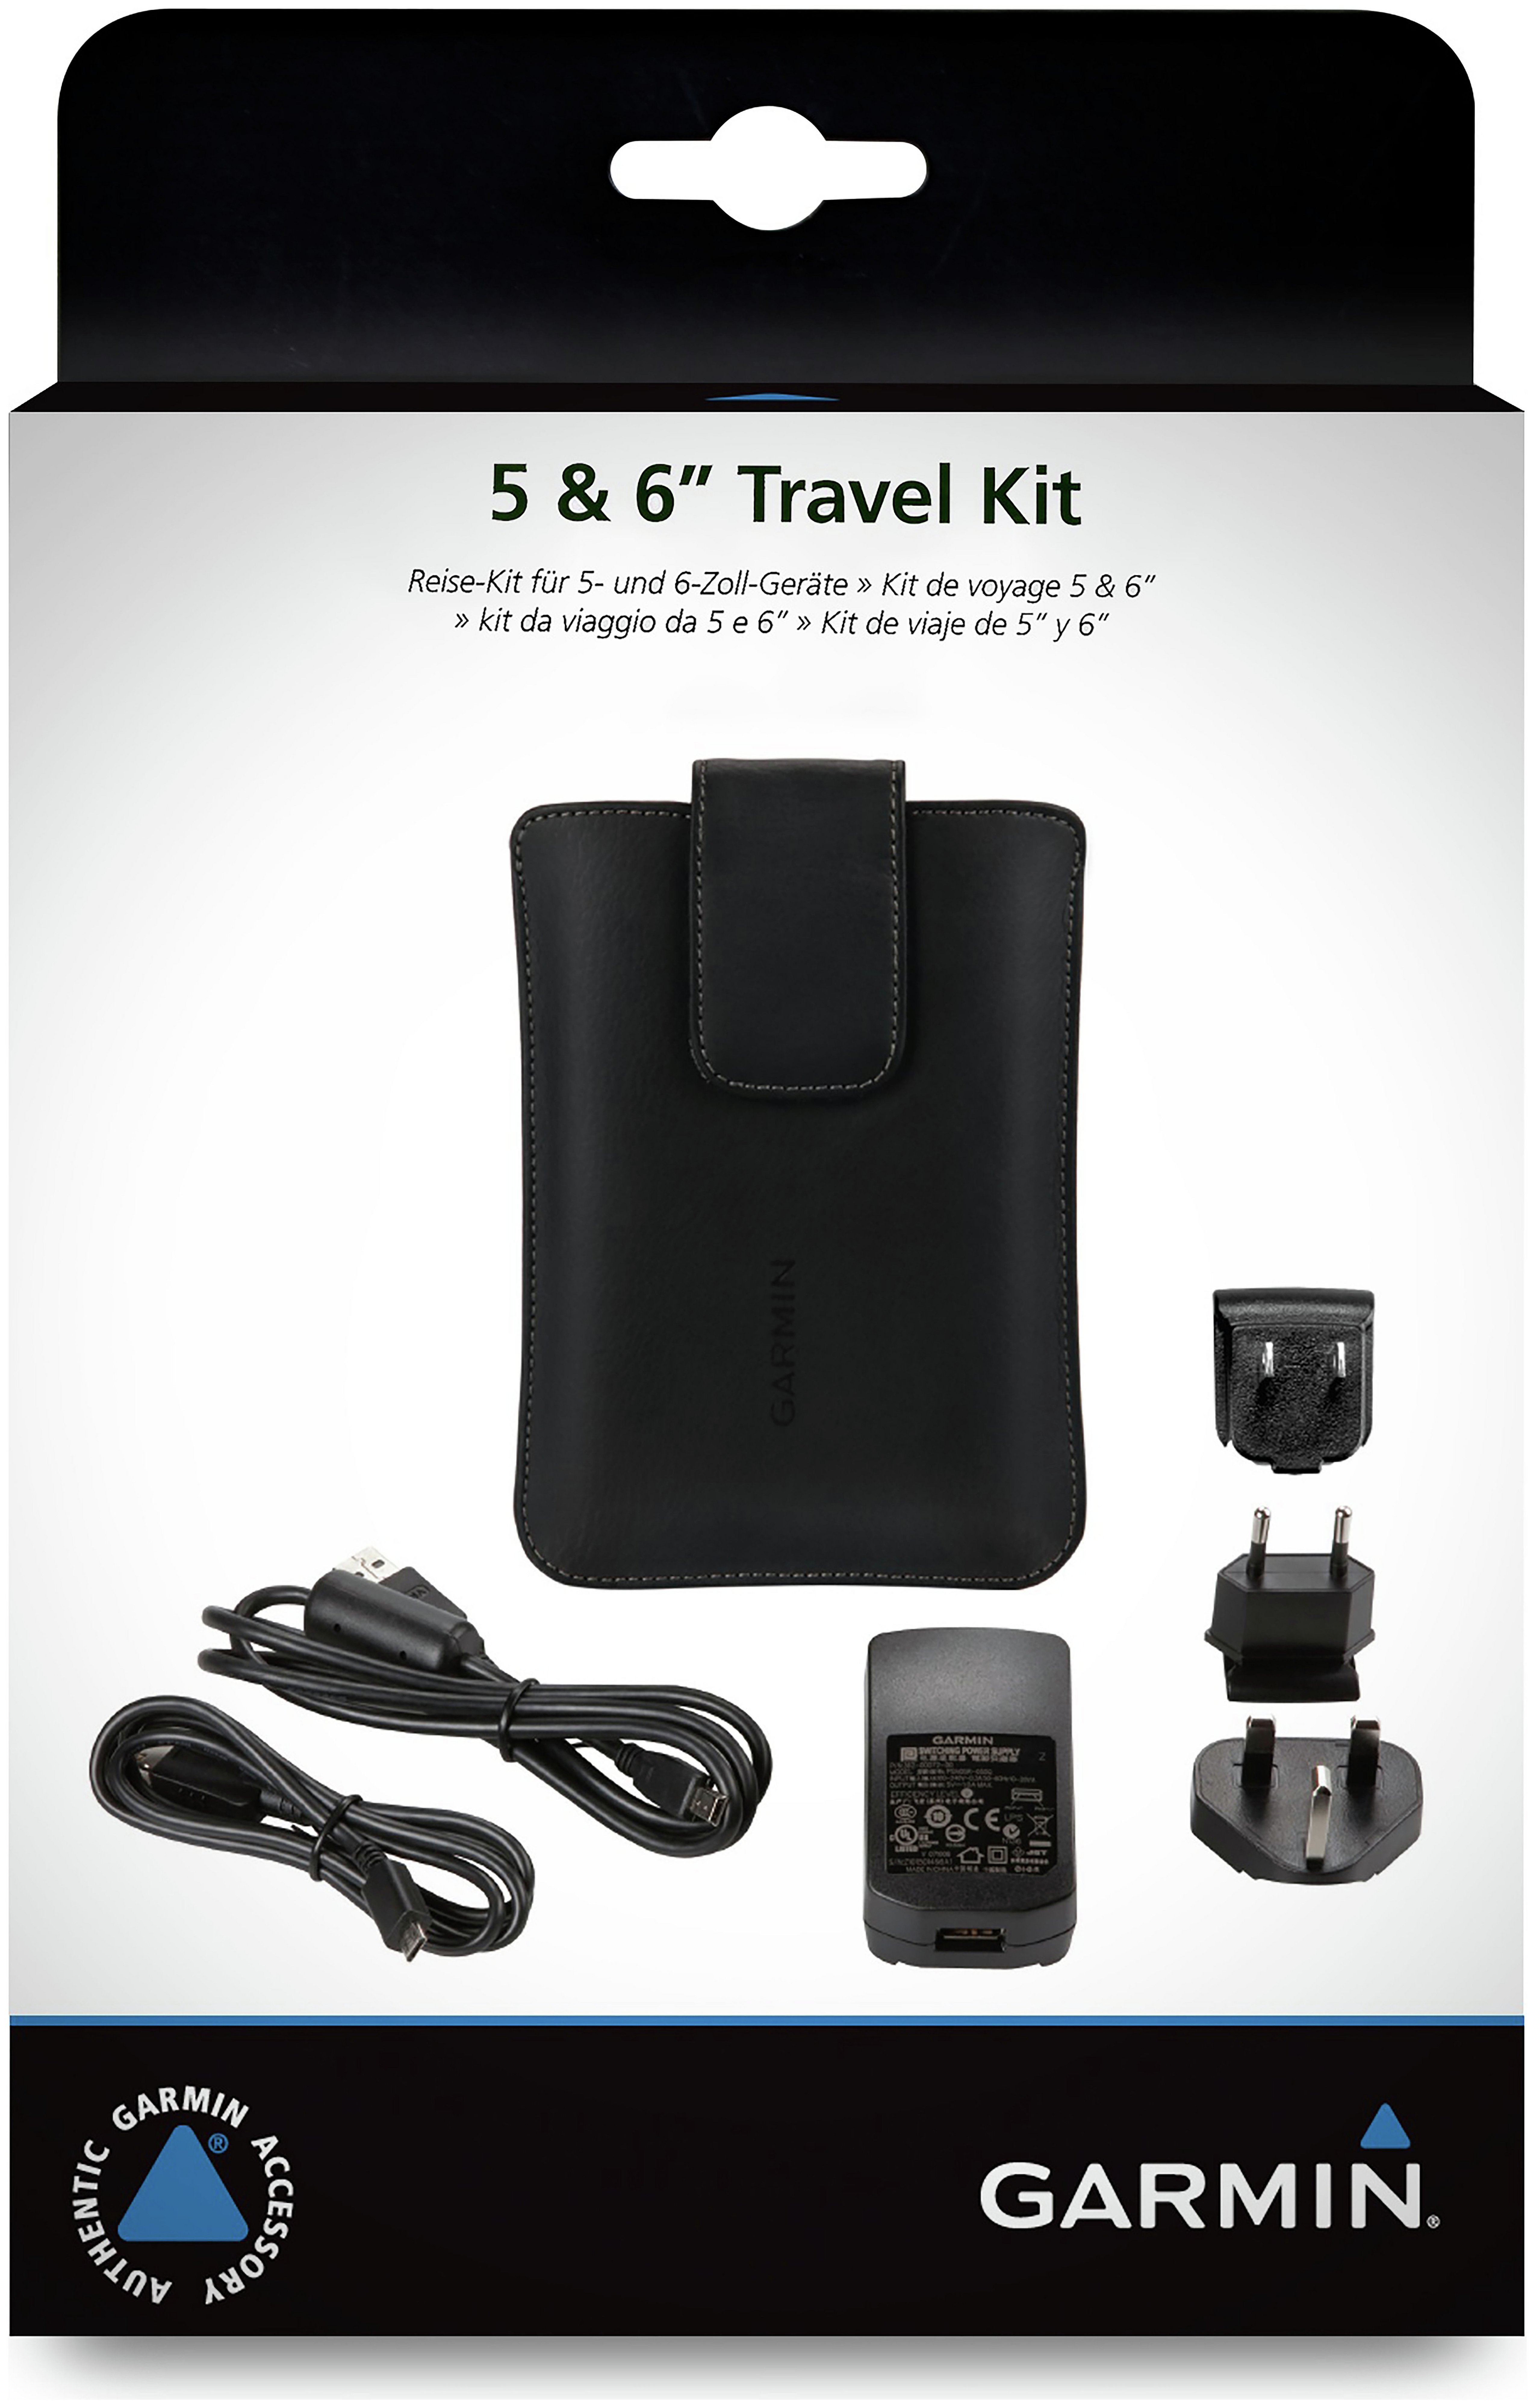 Garmin 5 or 6 Inch Sat Nav Travel Kit Review